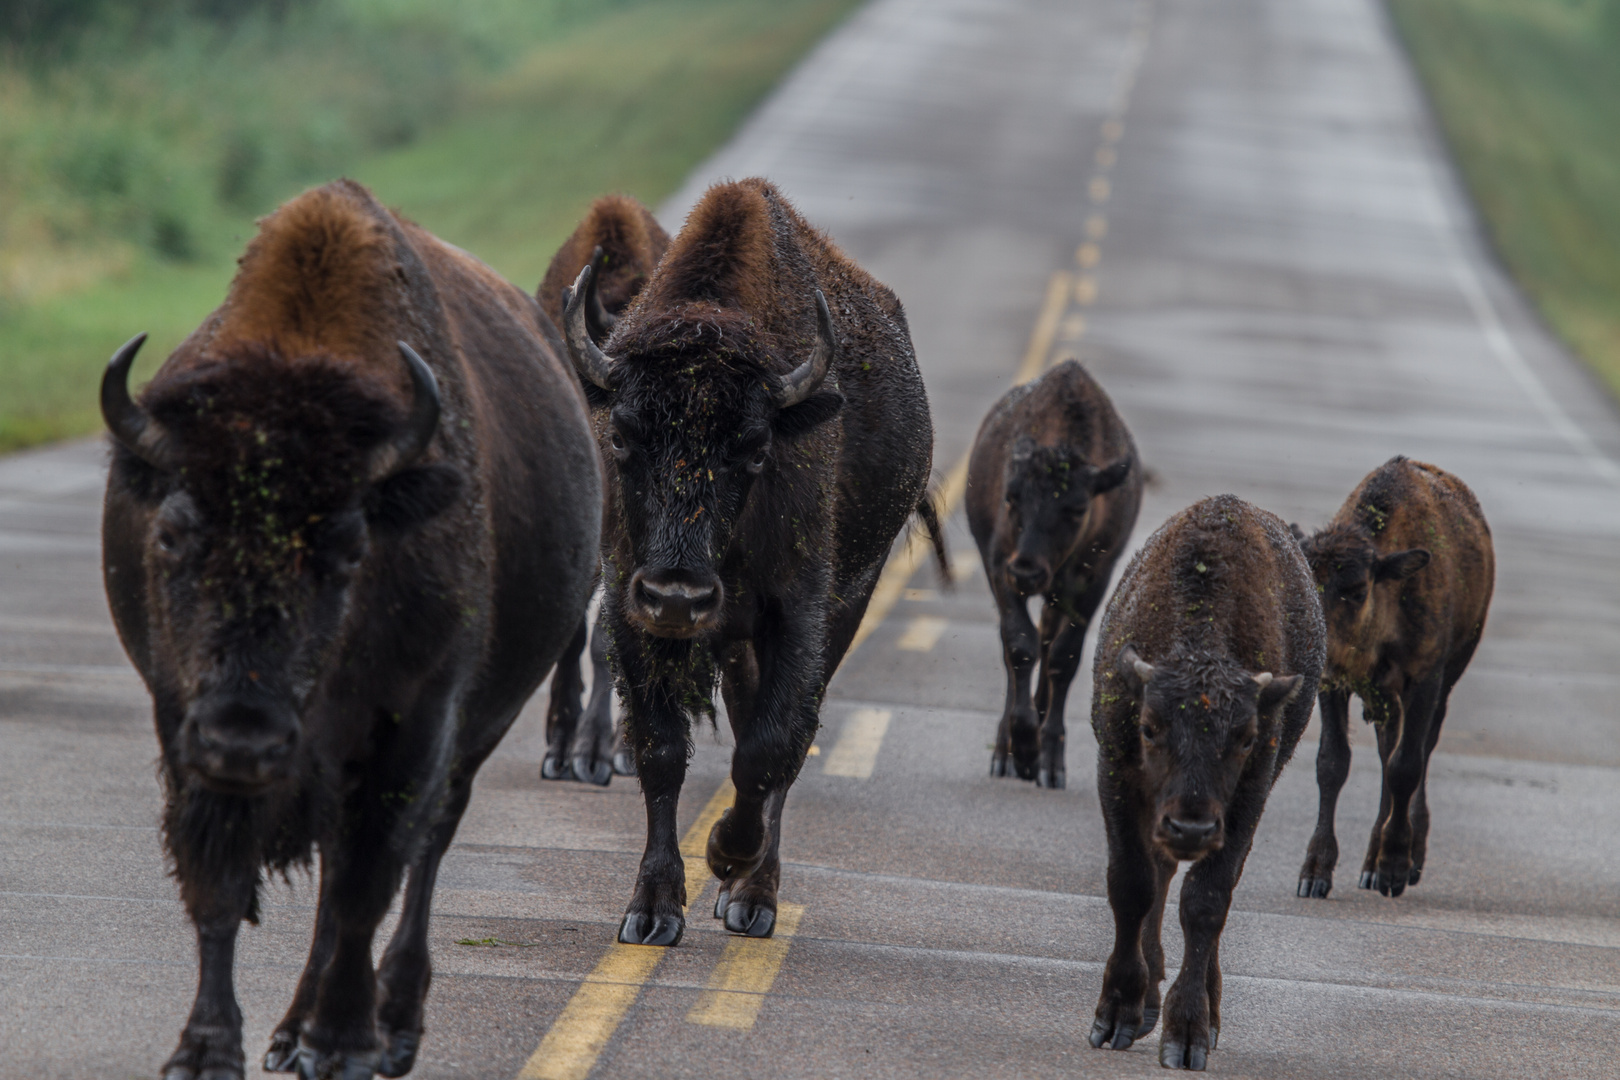 bisons ahead